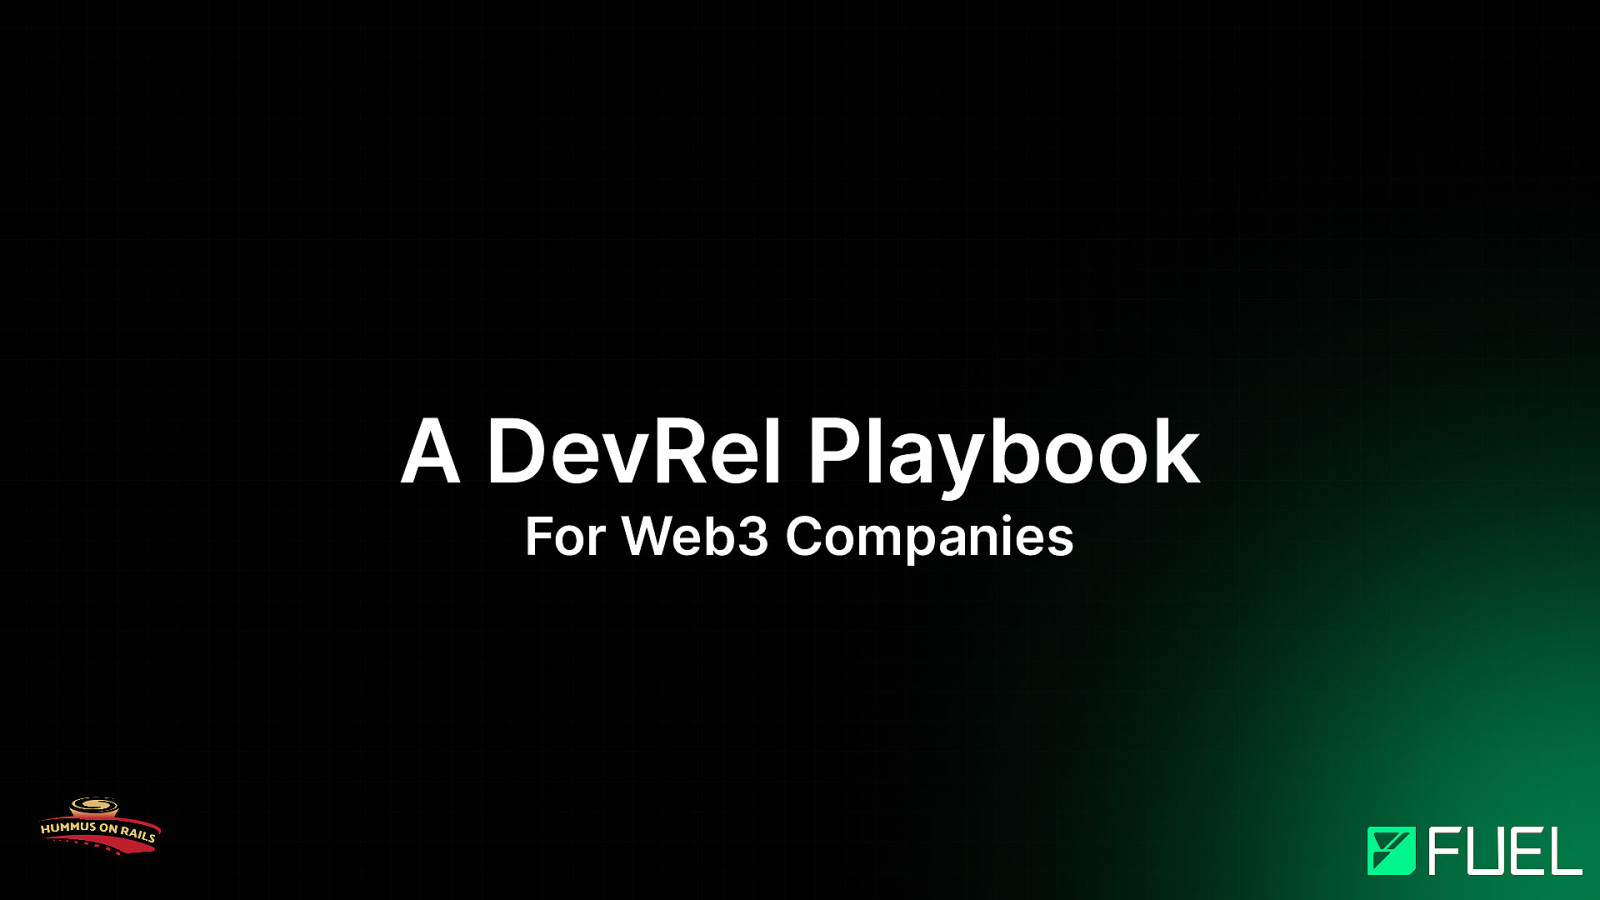 DevRel Playbook for Web3 Companies by Ben Greenberg